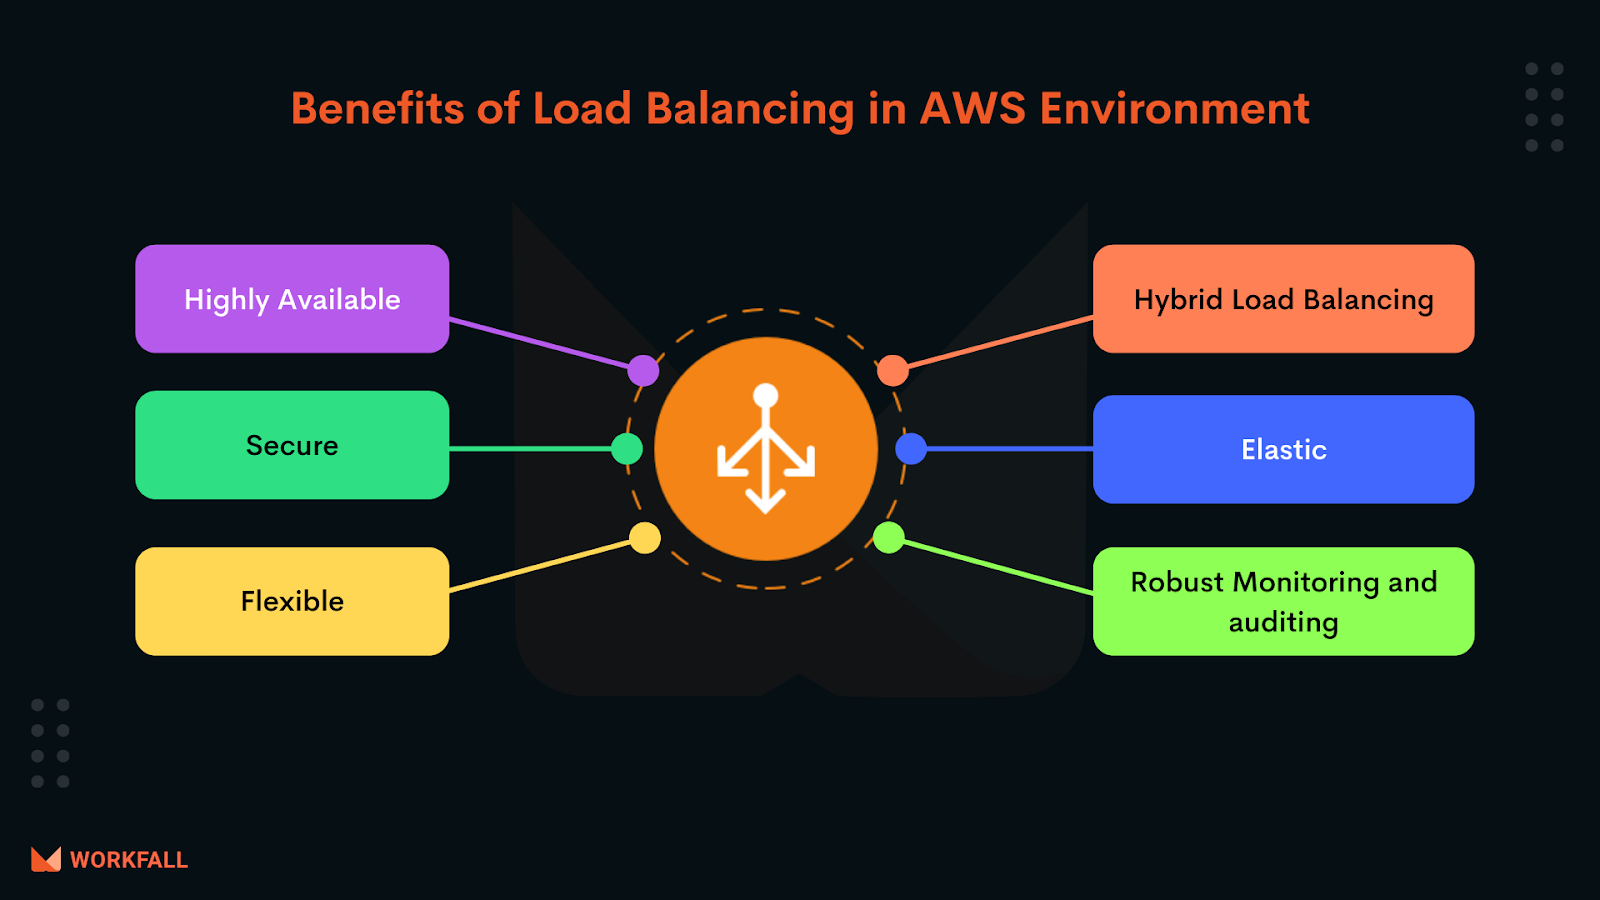 Benefits of Elastic Load Balancing